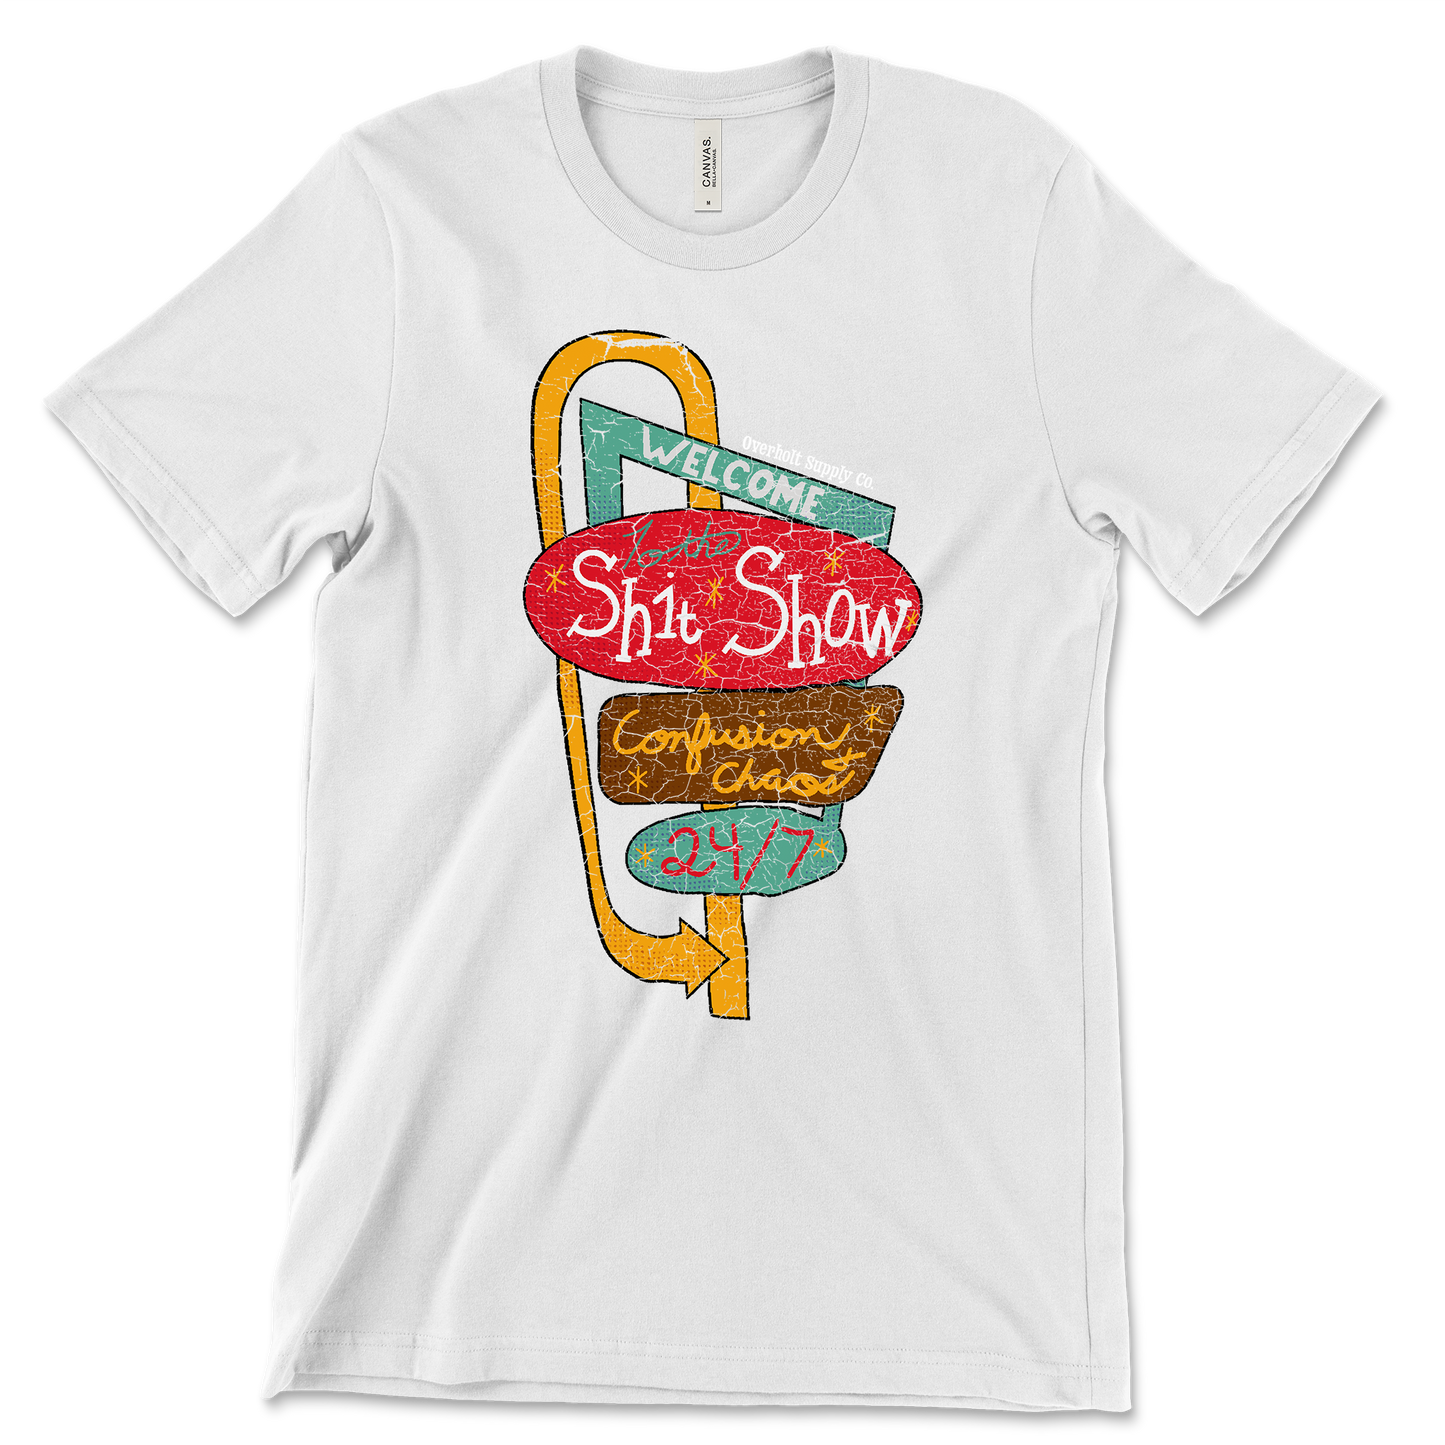 OSC-031 Shit Show T-Shirt